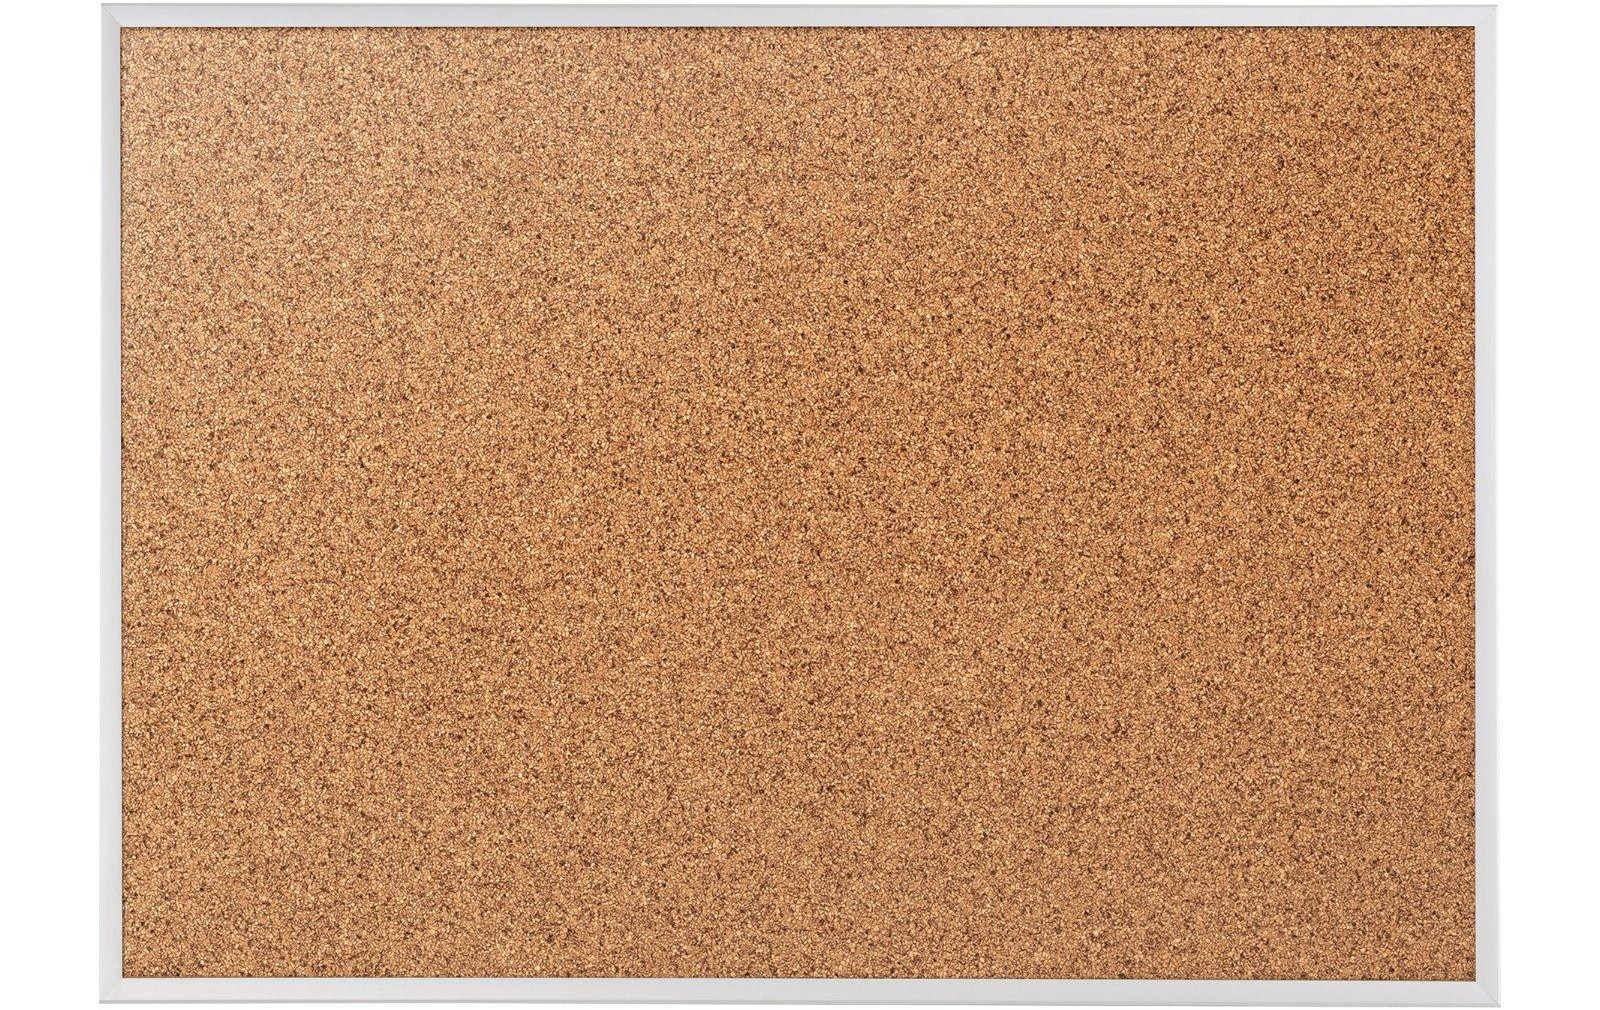 Quartet Cork Bulletin Board, 24 x 18 Inches, Corkboard, Aluminum Frame